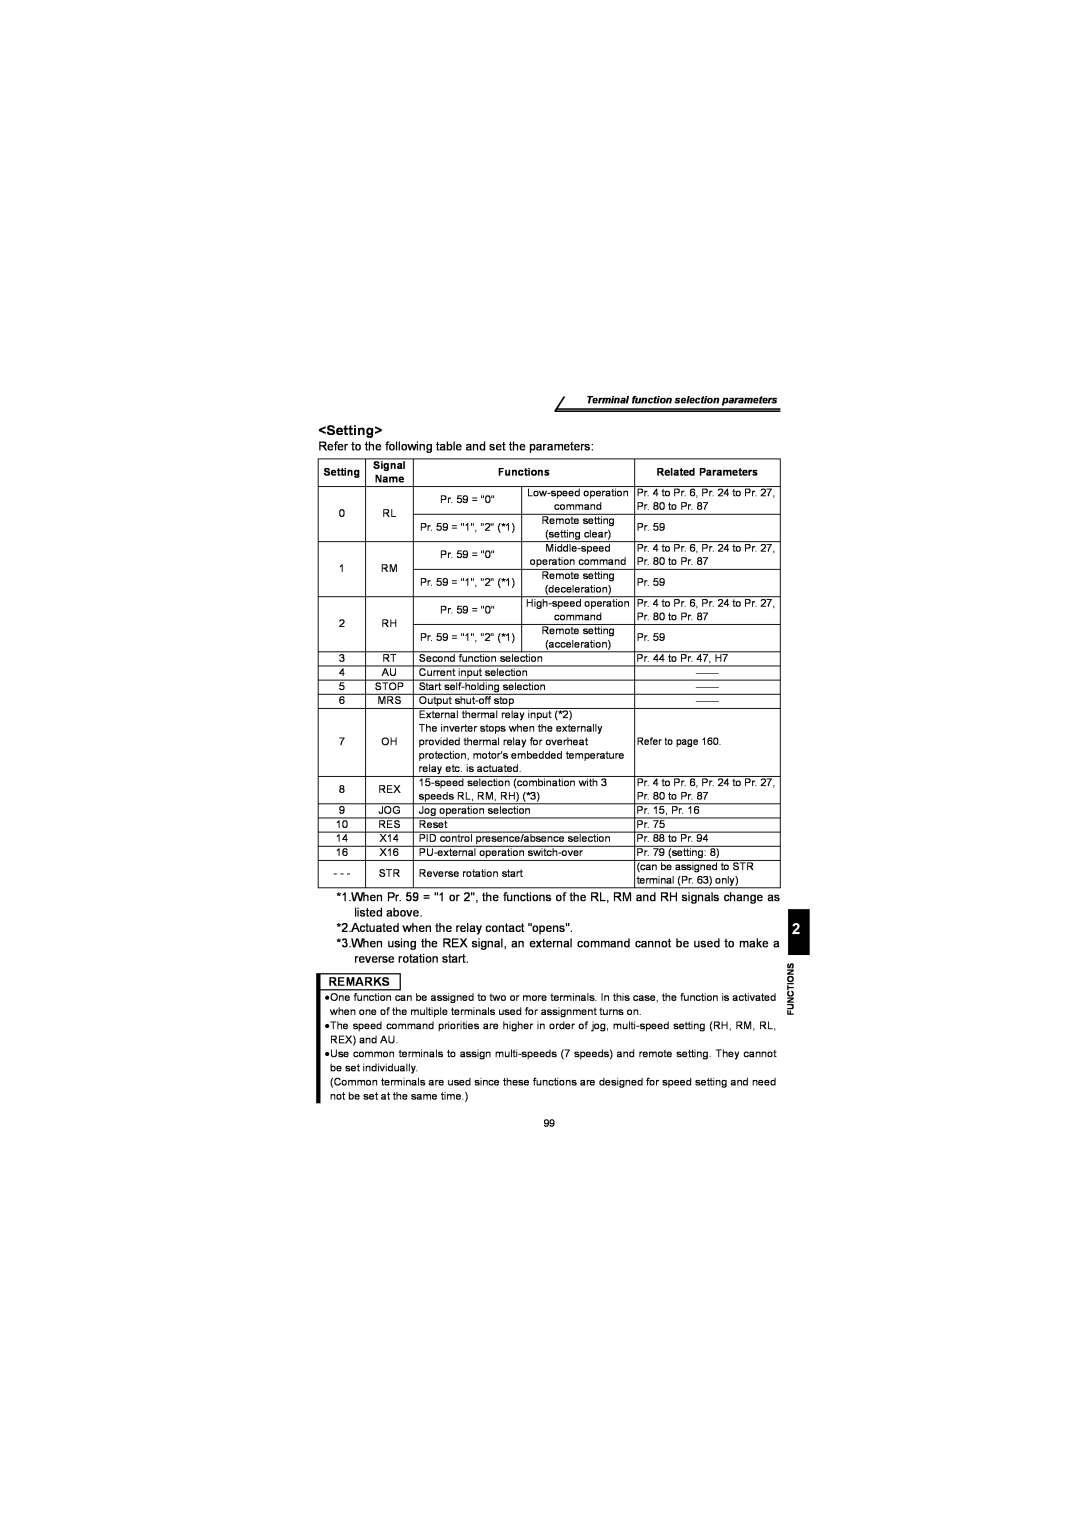 Mitsubishi Electronics FR-S500 instruction manual Setting, Remarks, Terminal function selection parameters 